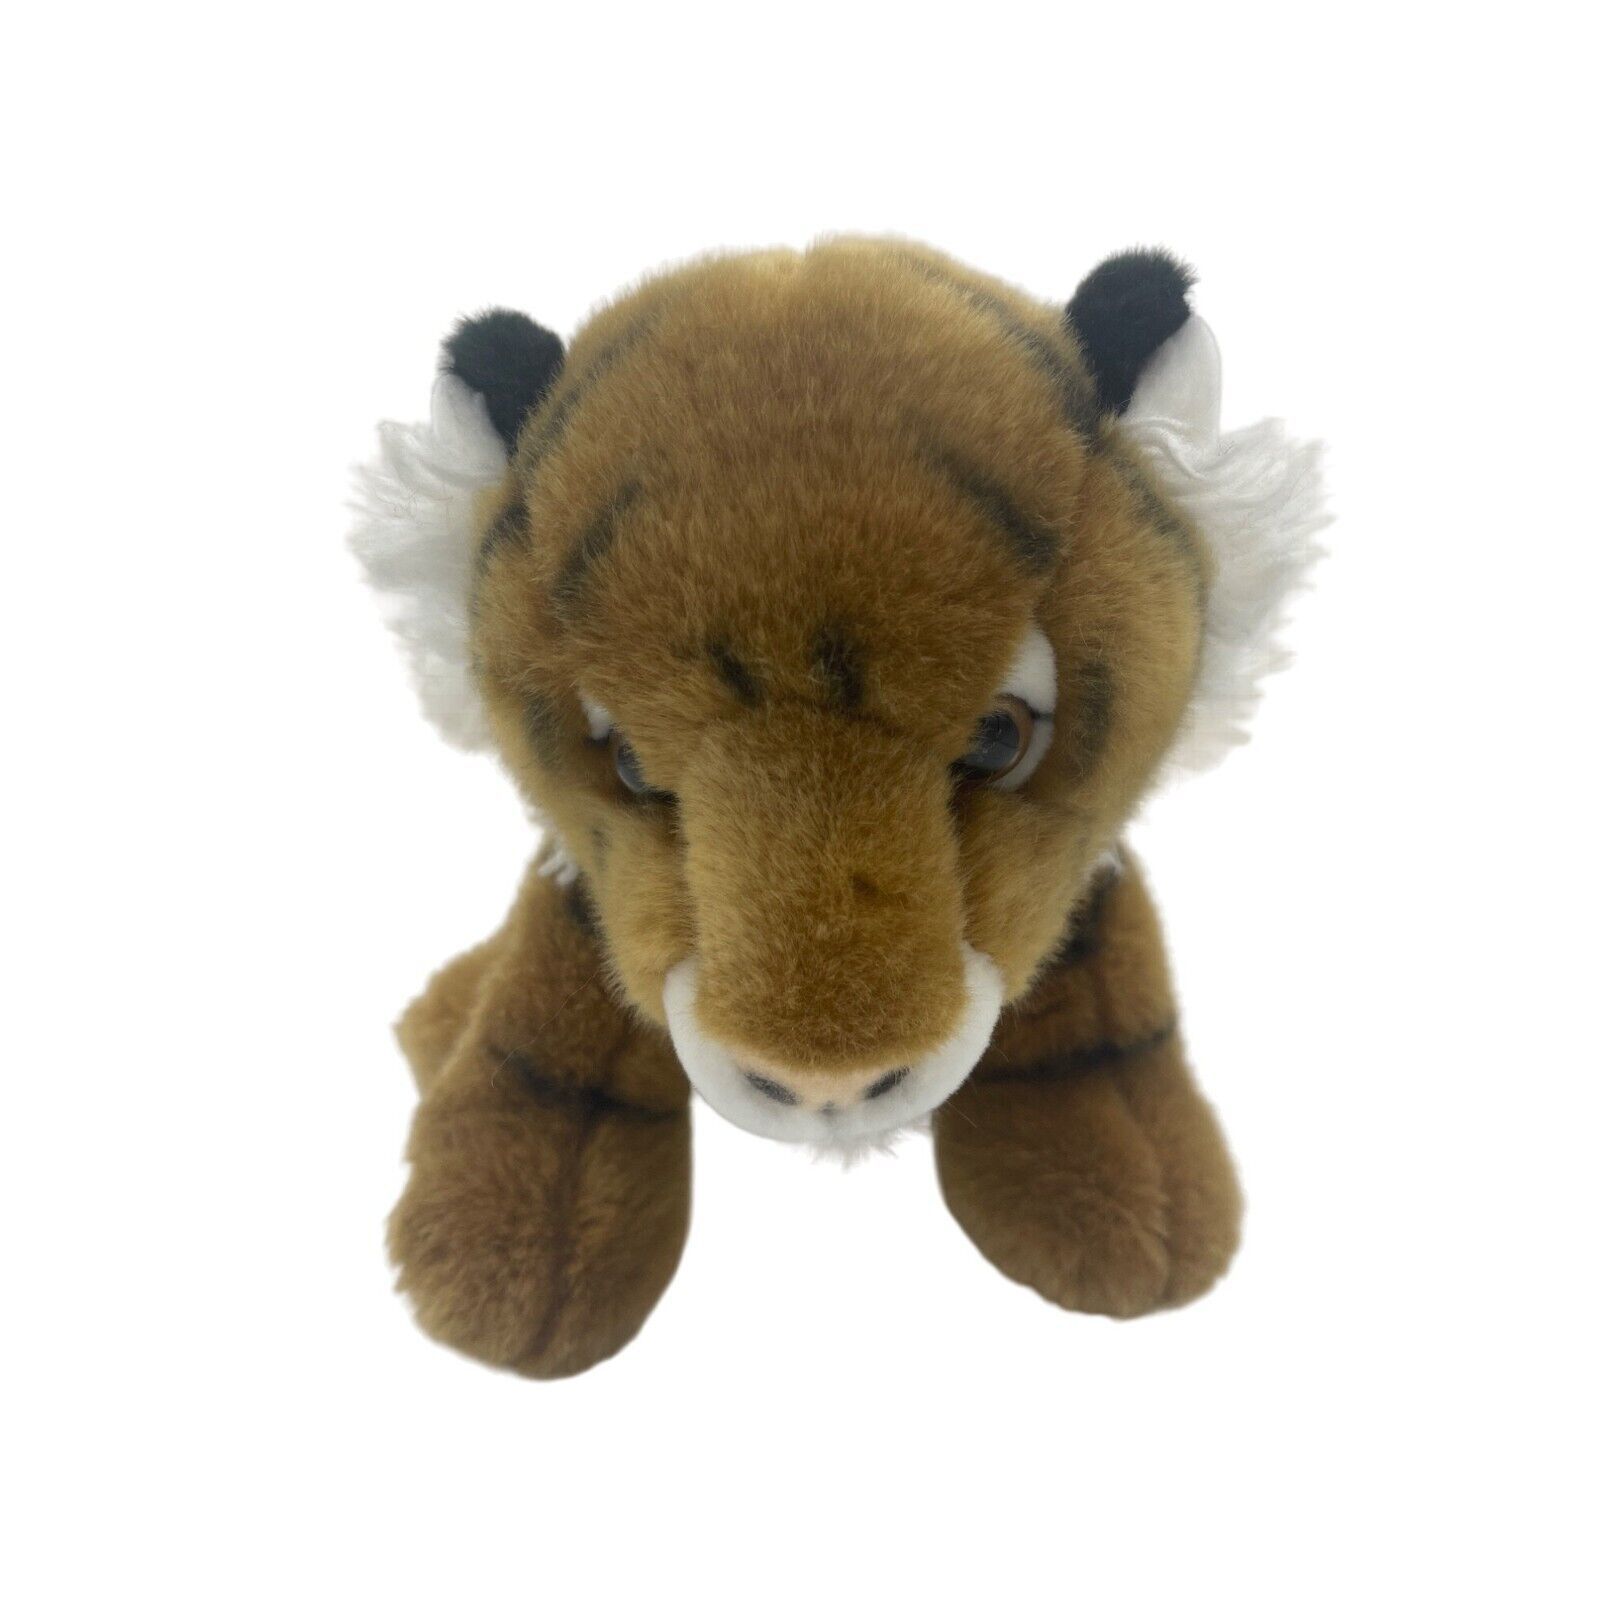 Adventure Planet 2019 Tiger Cub Plush Stuffed Animal 11 in - $13.16